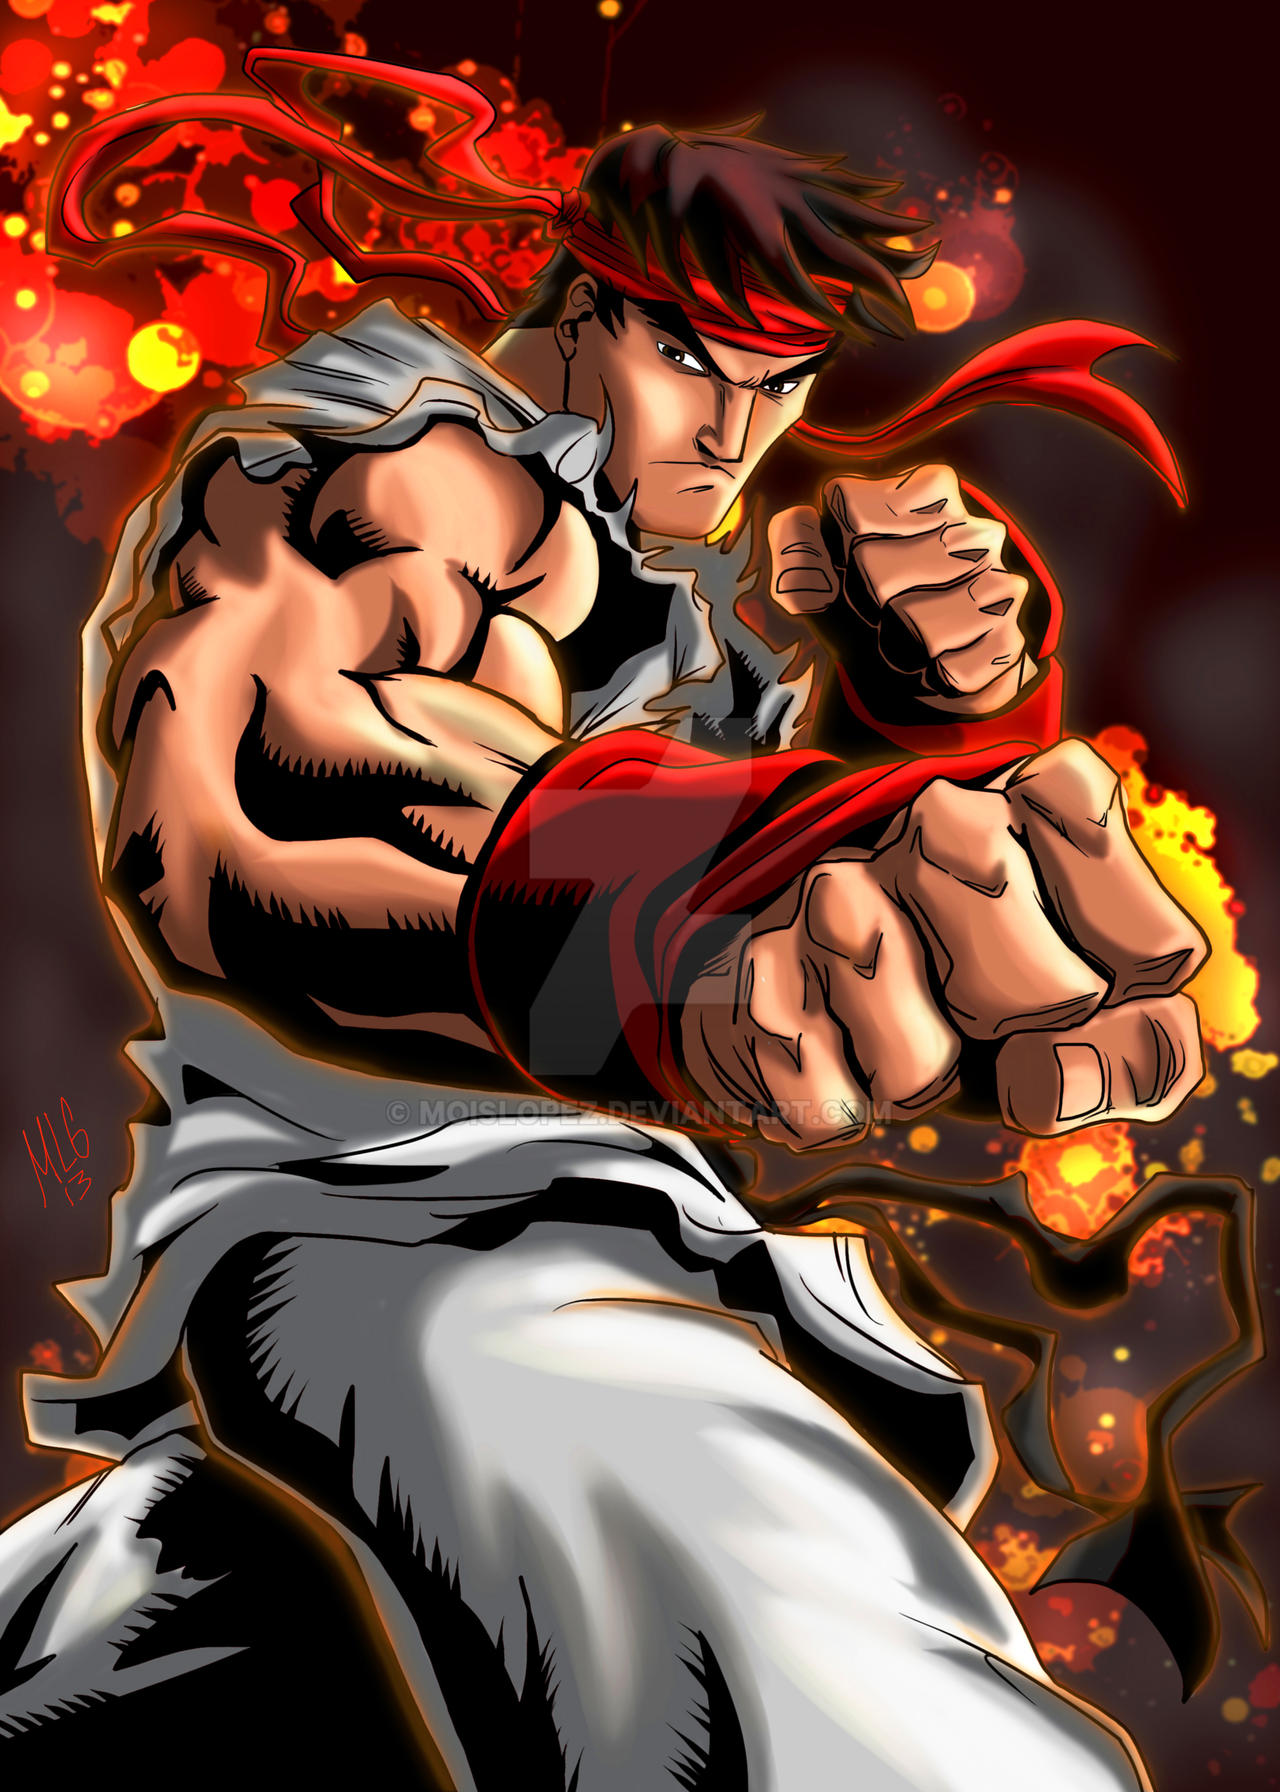 RYU Street Fighter 6 reimagined in 2D by WELL-ArtLOL on DeviantArt